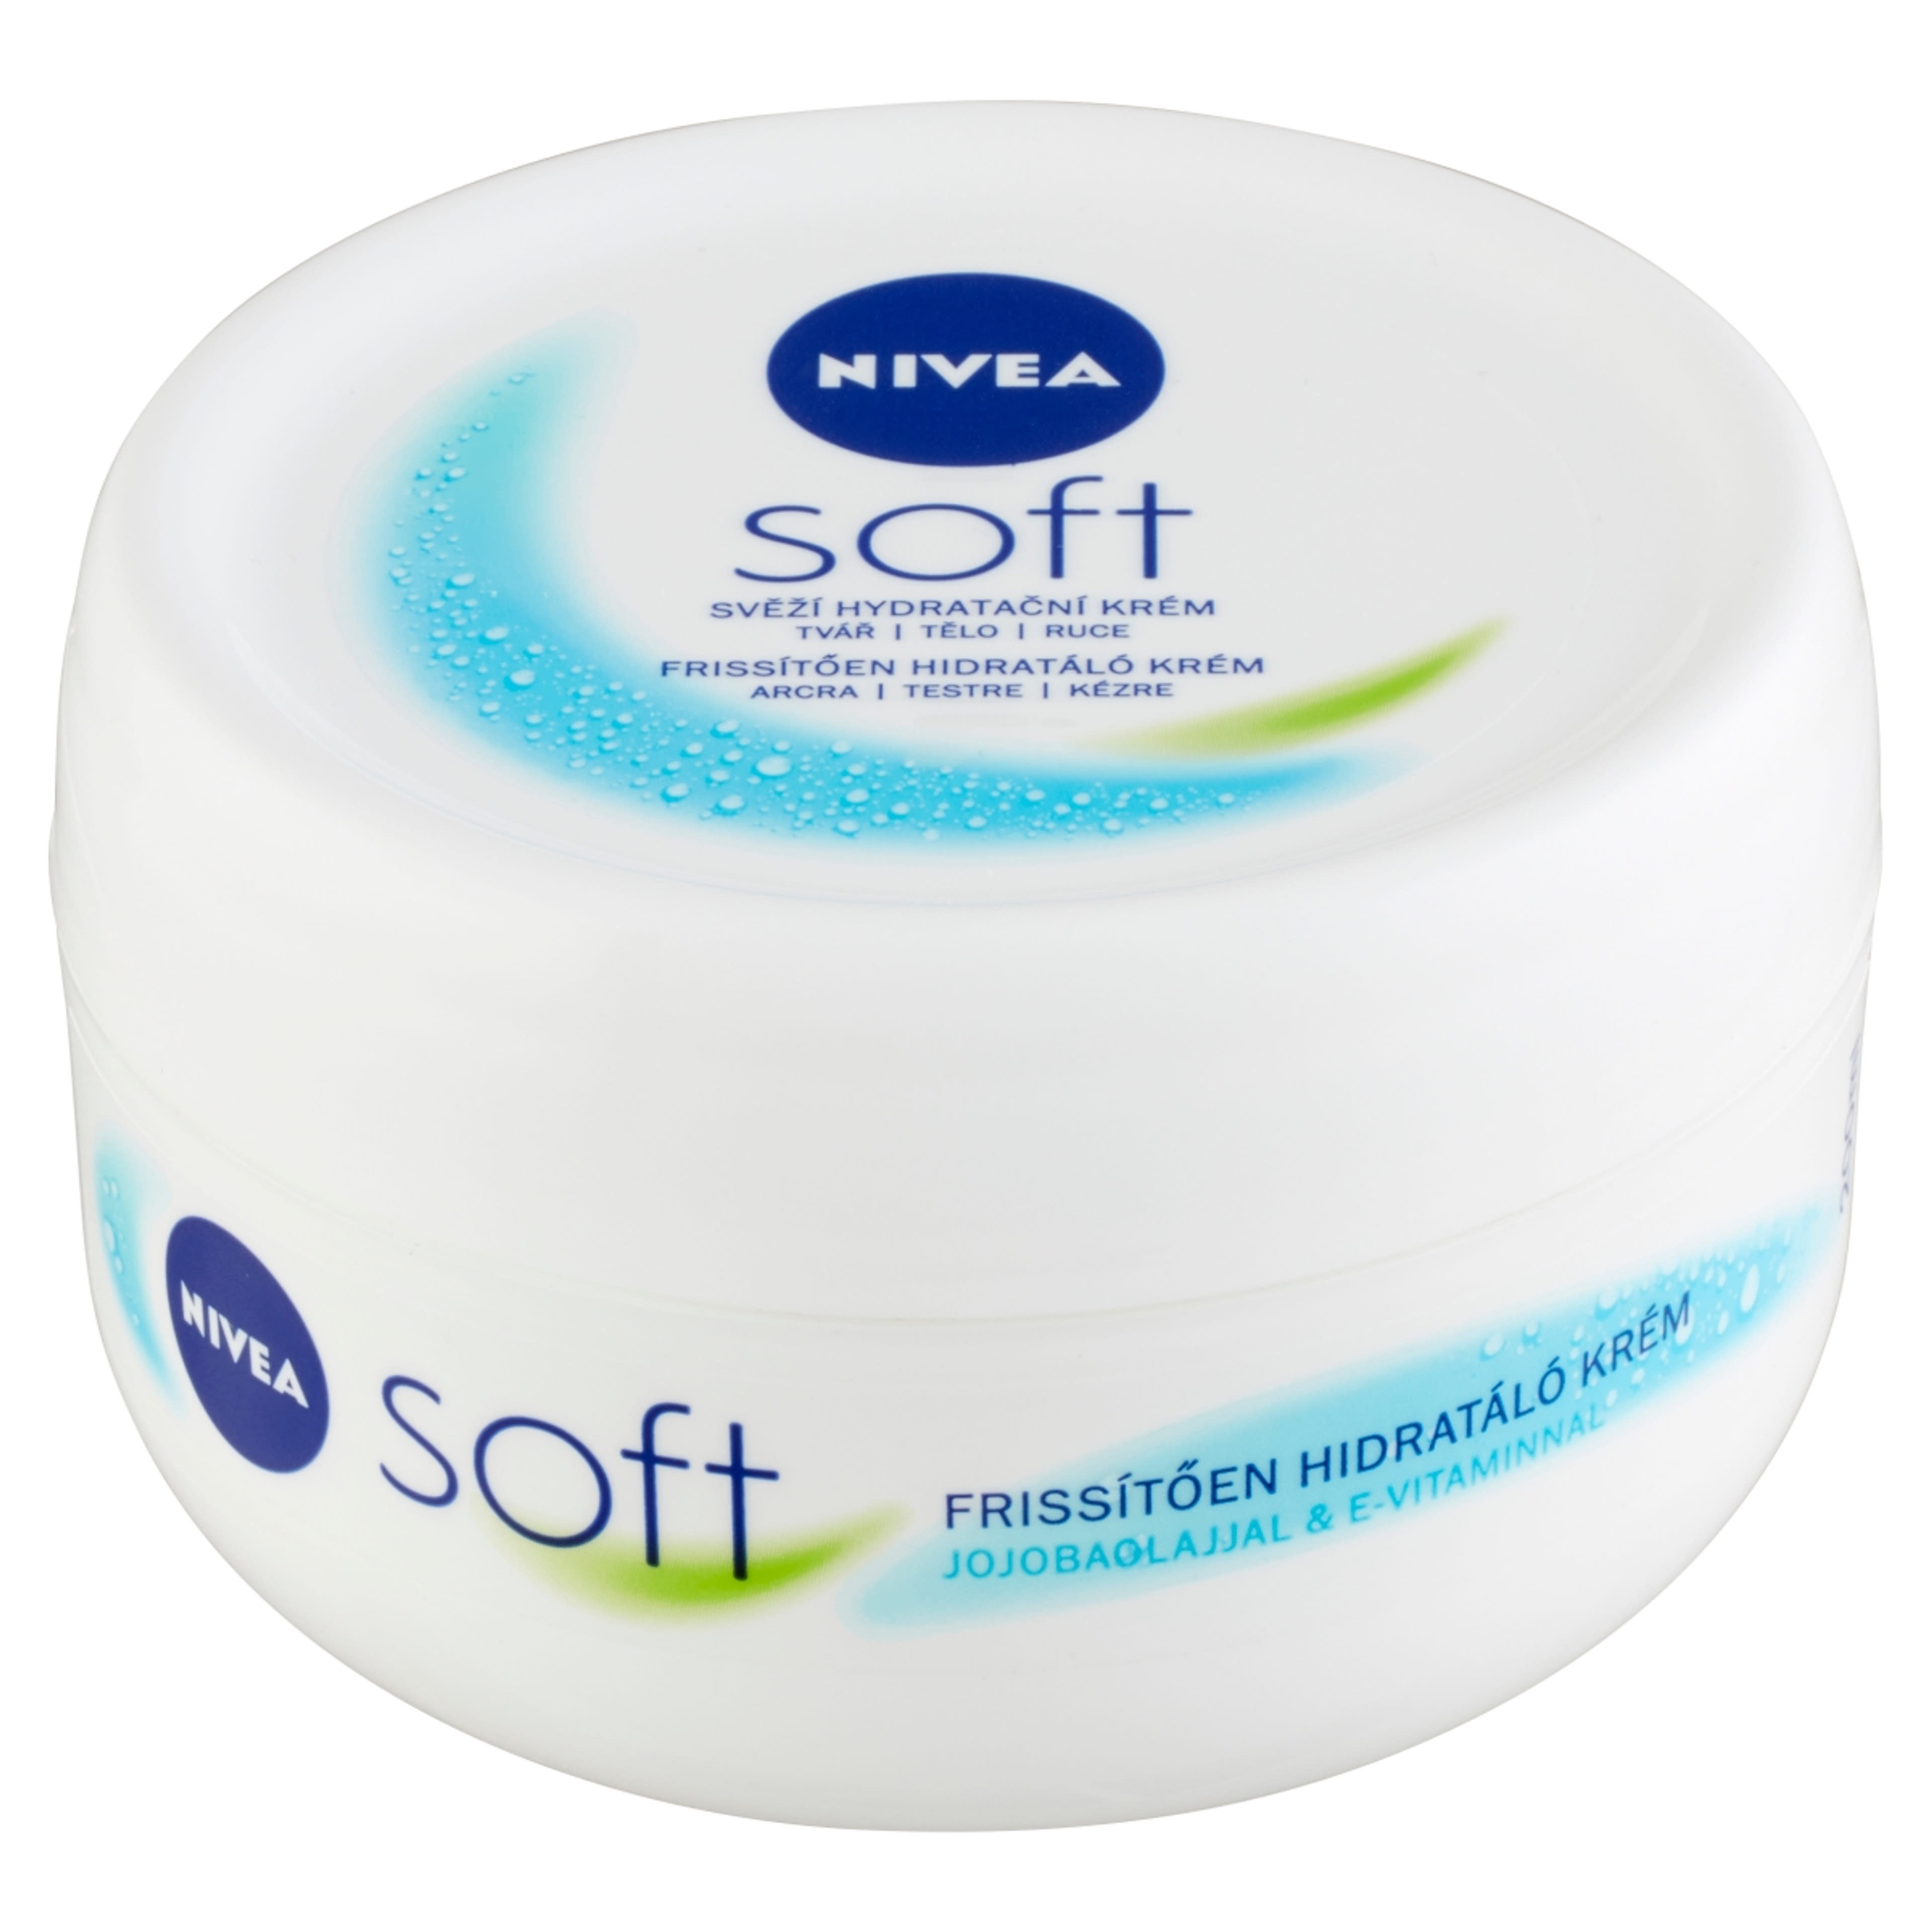 NIVEA Soft - 200 ml-2